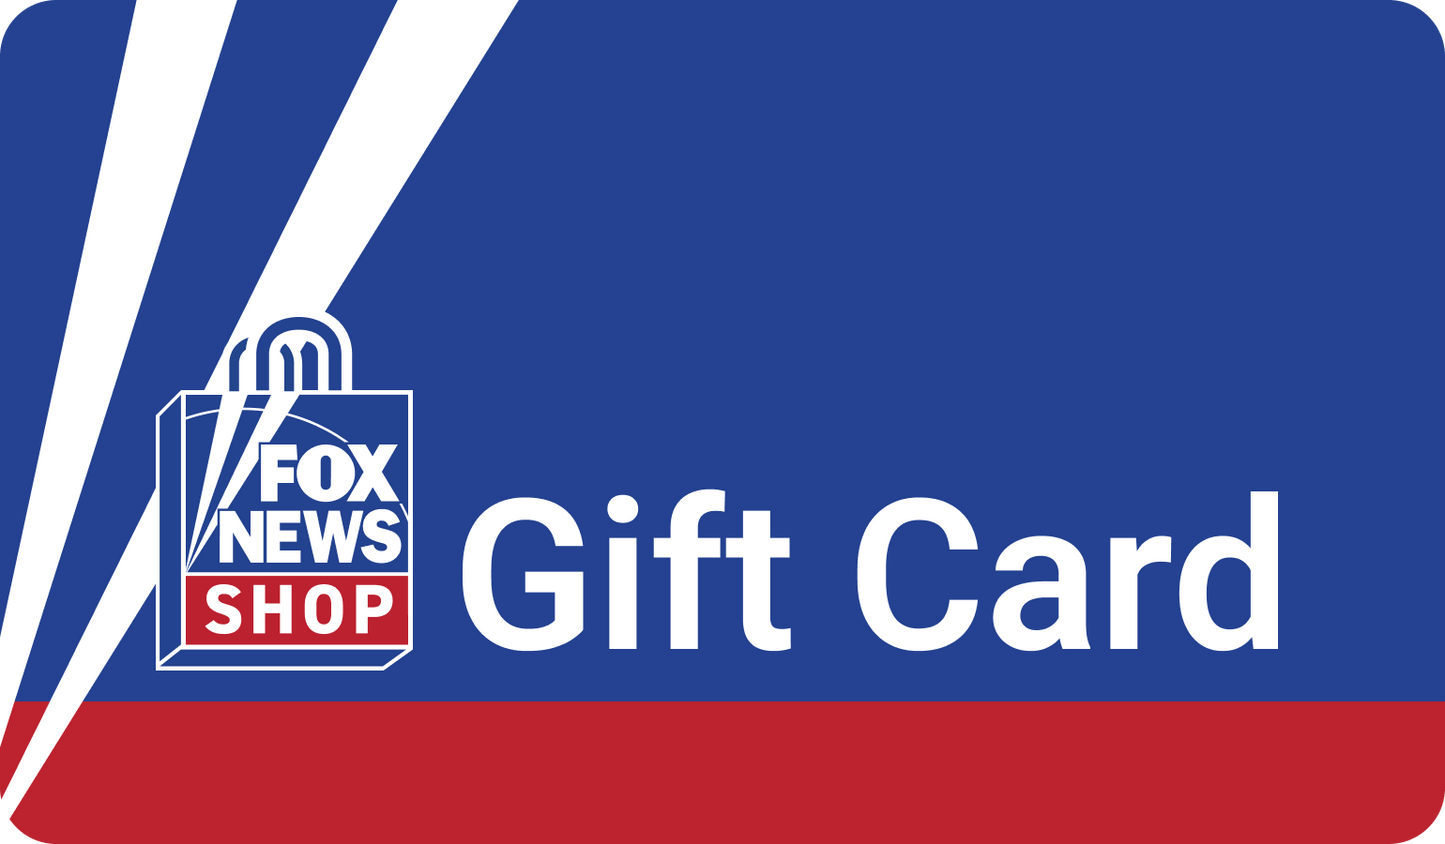 Fox News Shop Digital Gift Card